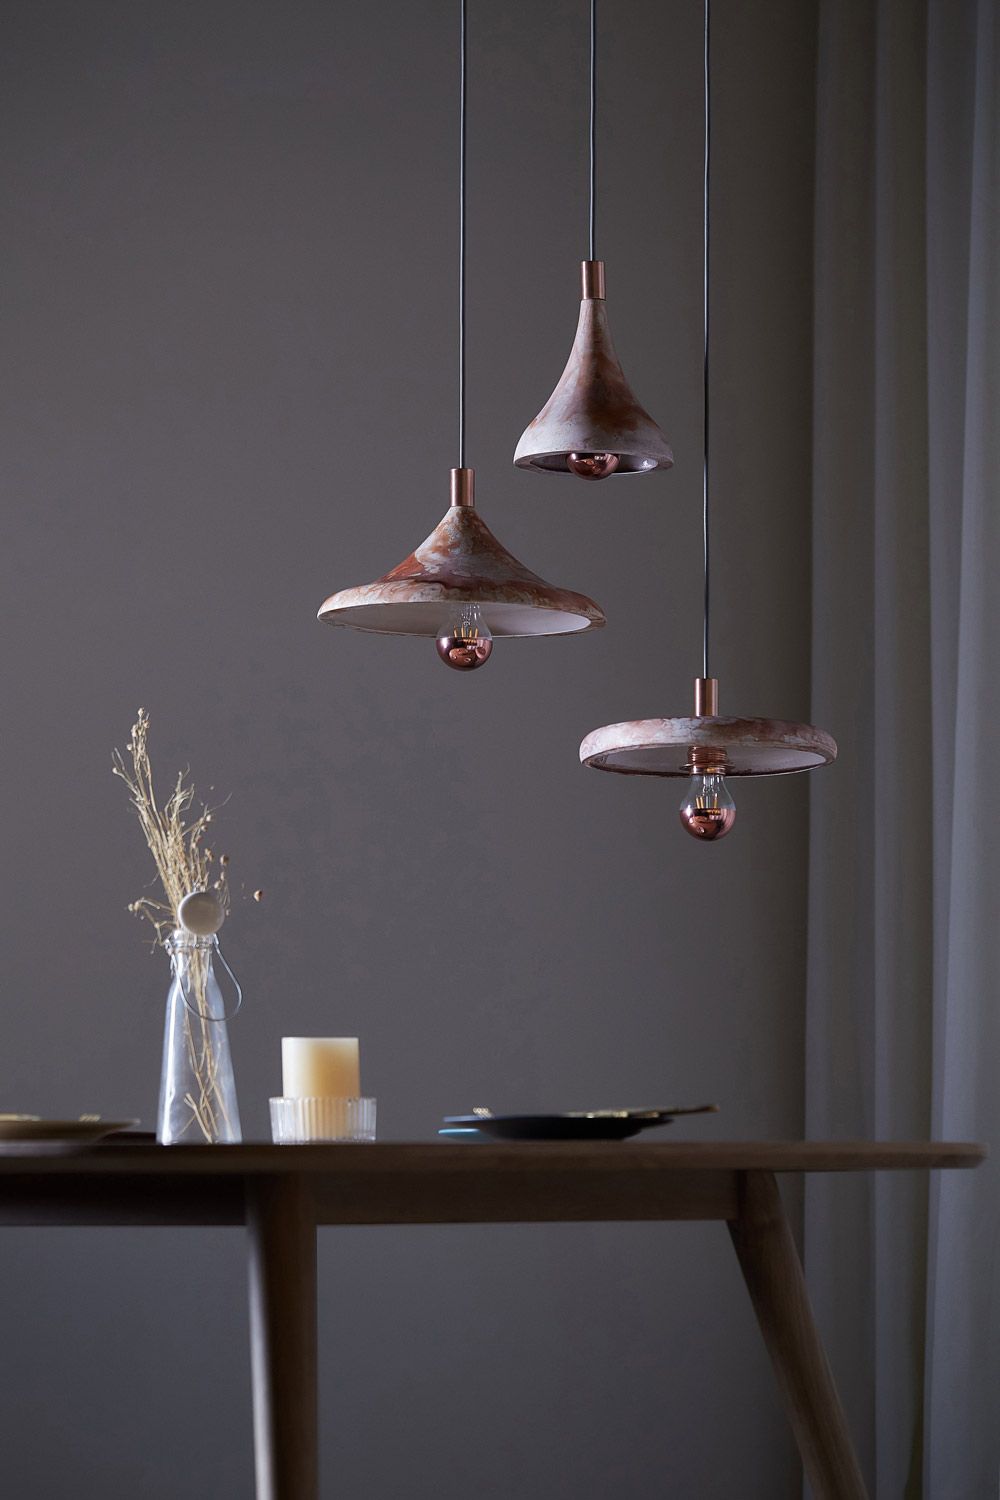 Zhekai Zhang - Coffire Lamps-Visual Atelier 8-Design-7.jpg